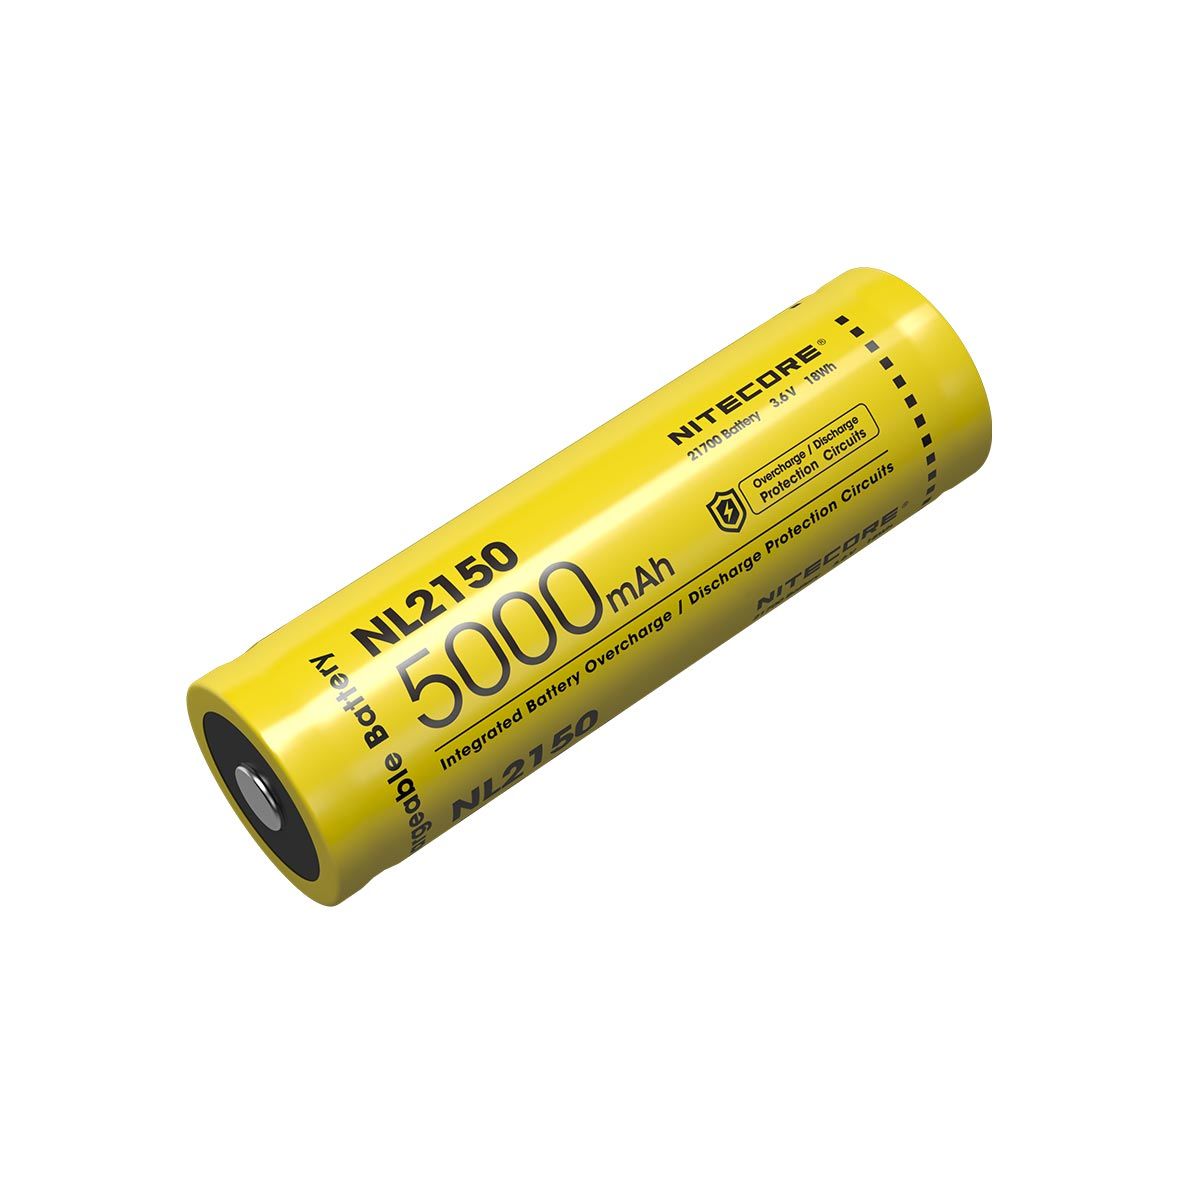 Batería recargable USB-C NL2150R pila 21700 5000mAh Nitecore